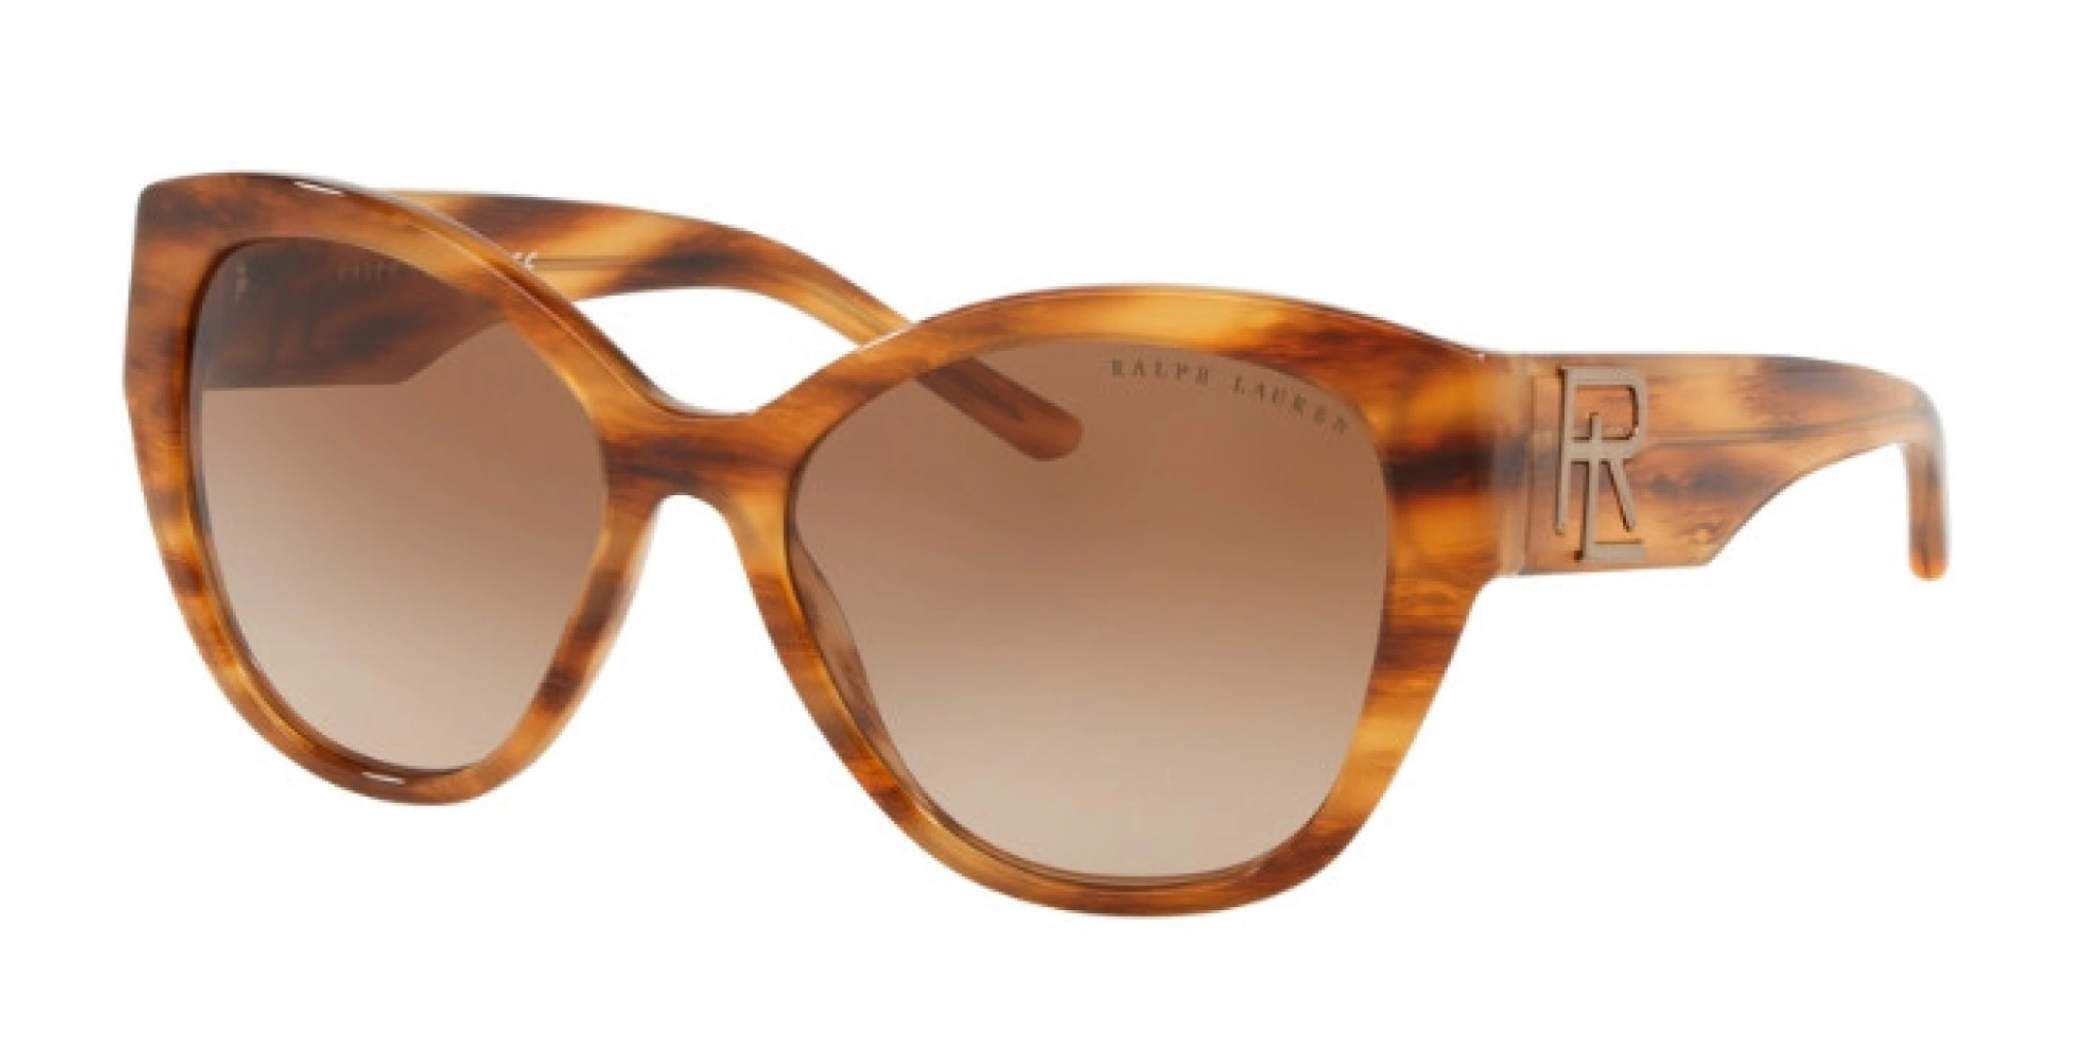 Ralph Lauren Women's Sunglasses Butterfly Tortoise RL8168570313